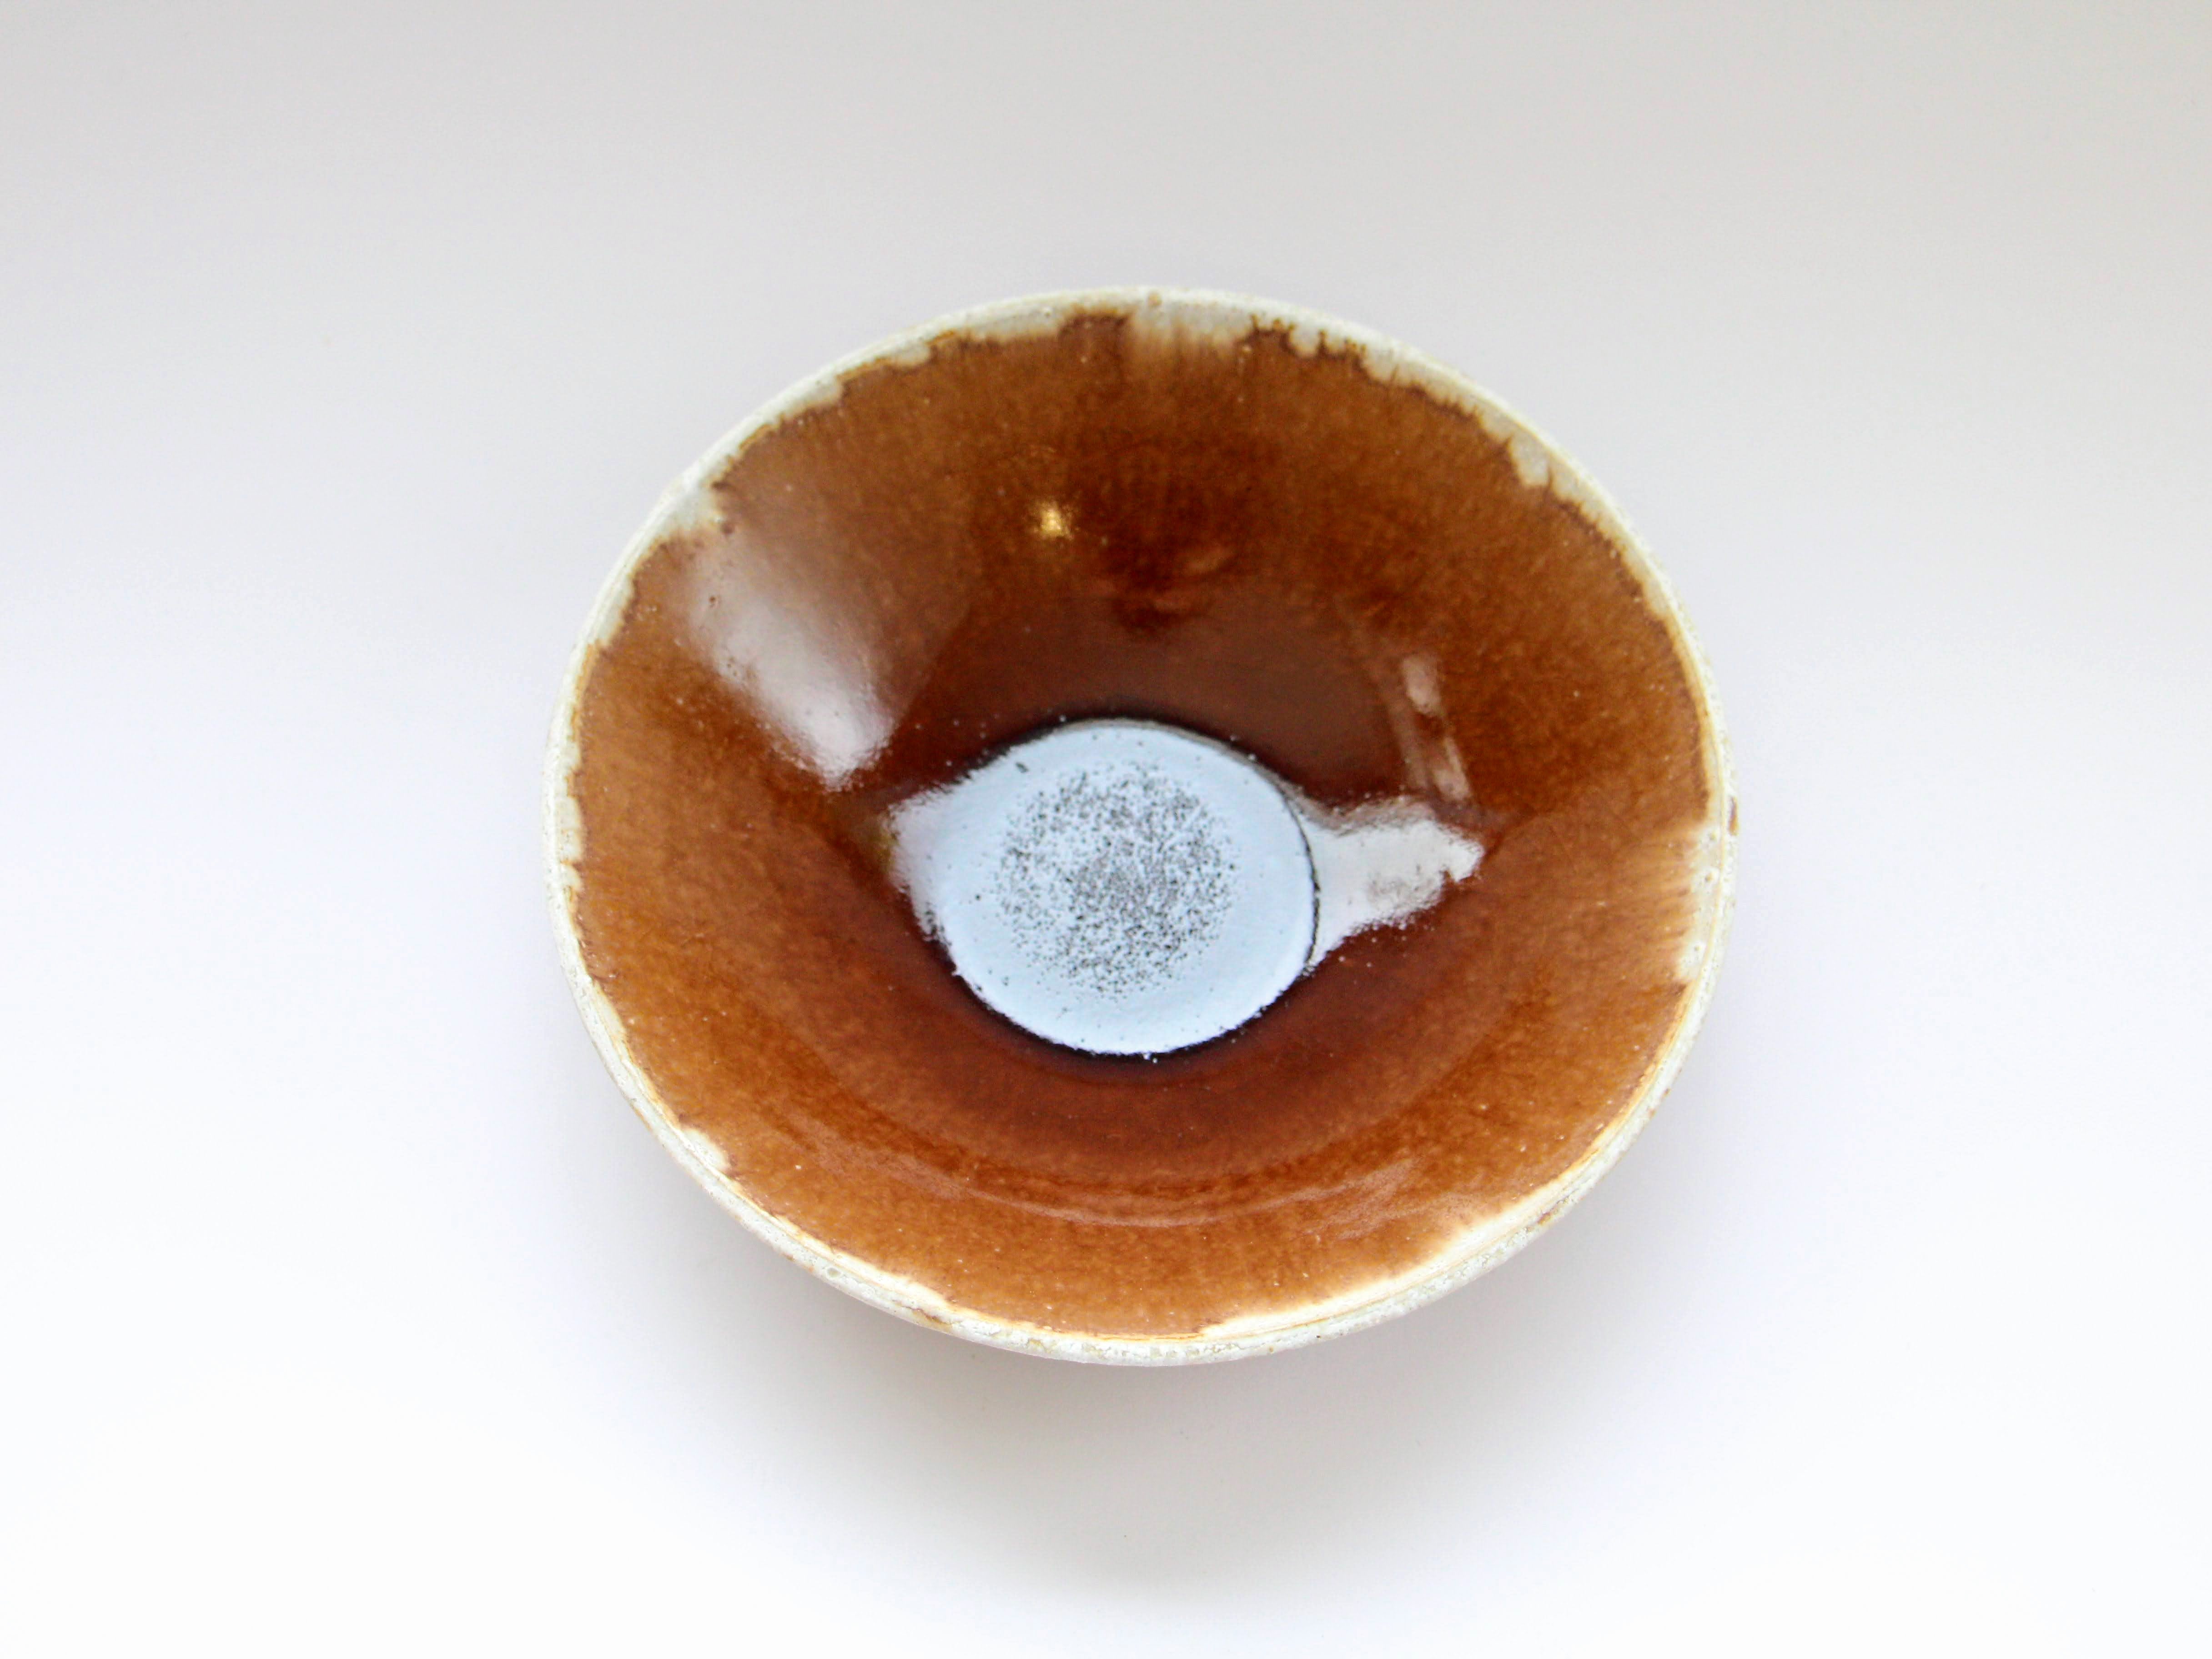 Maron glaze mouth white 6.5 inch shallow pot [Kazuhito Yamamoto]